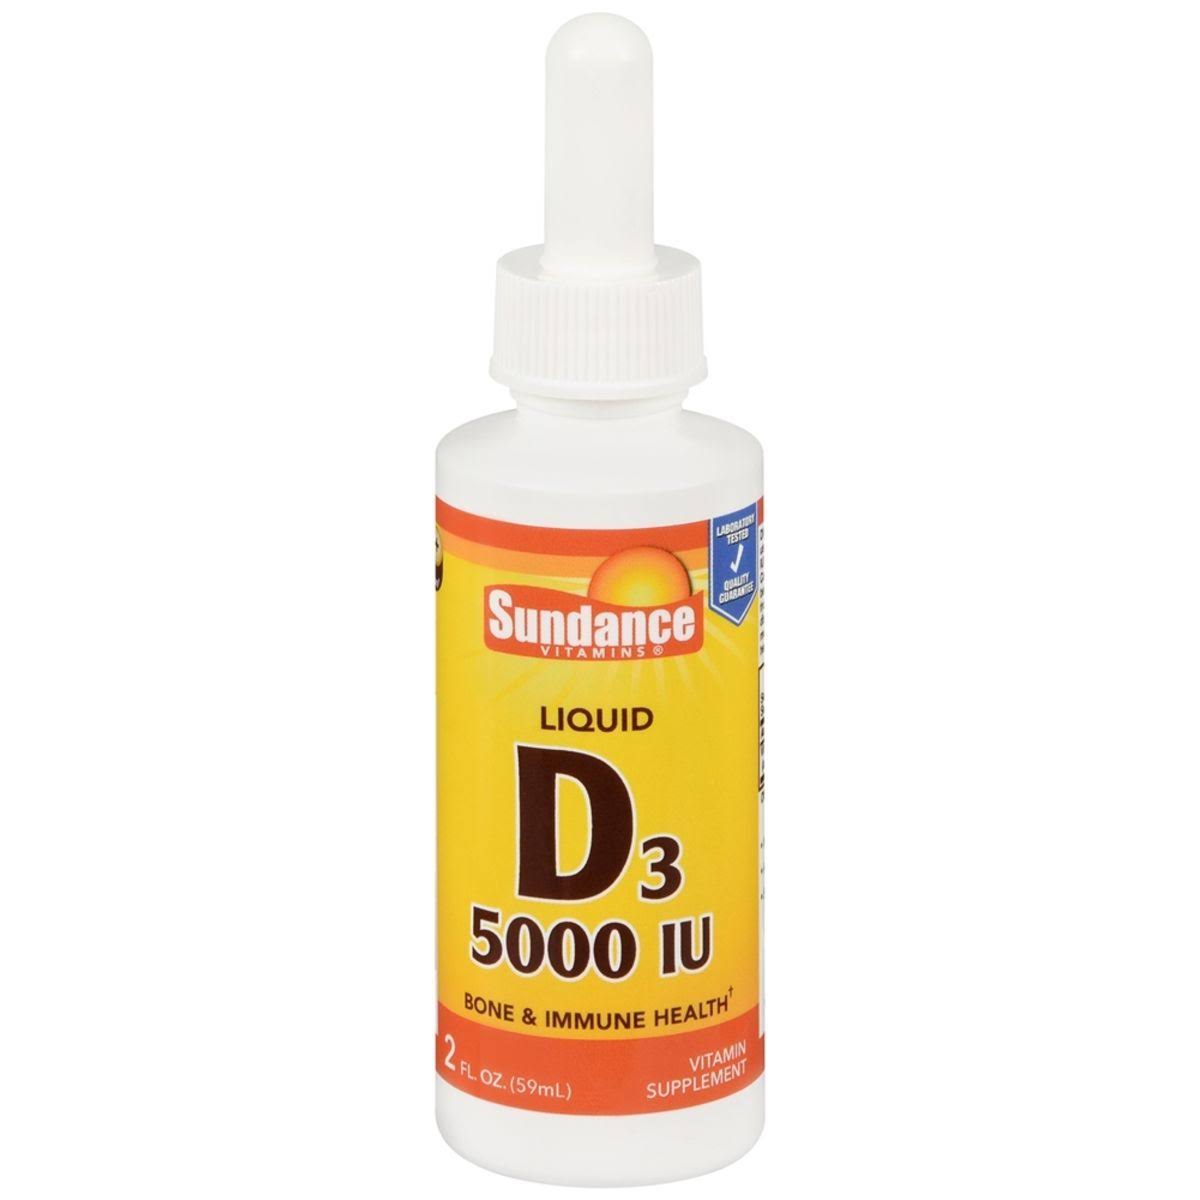 Sundance Vitamin D3 Liquid,5000 IU,2 Oz (Pack of 1)